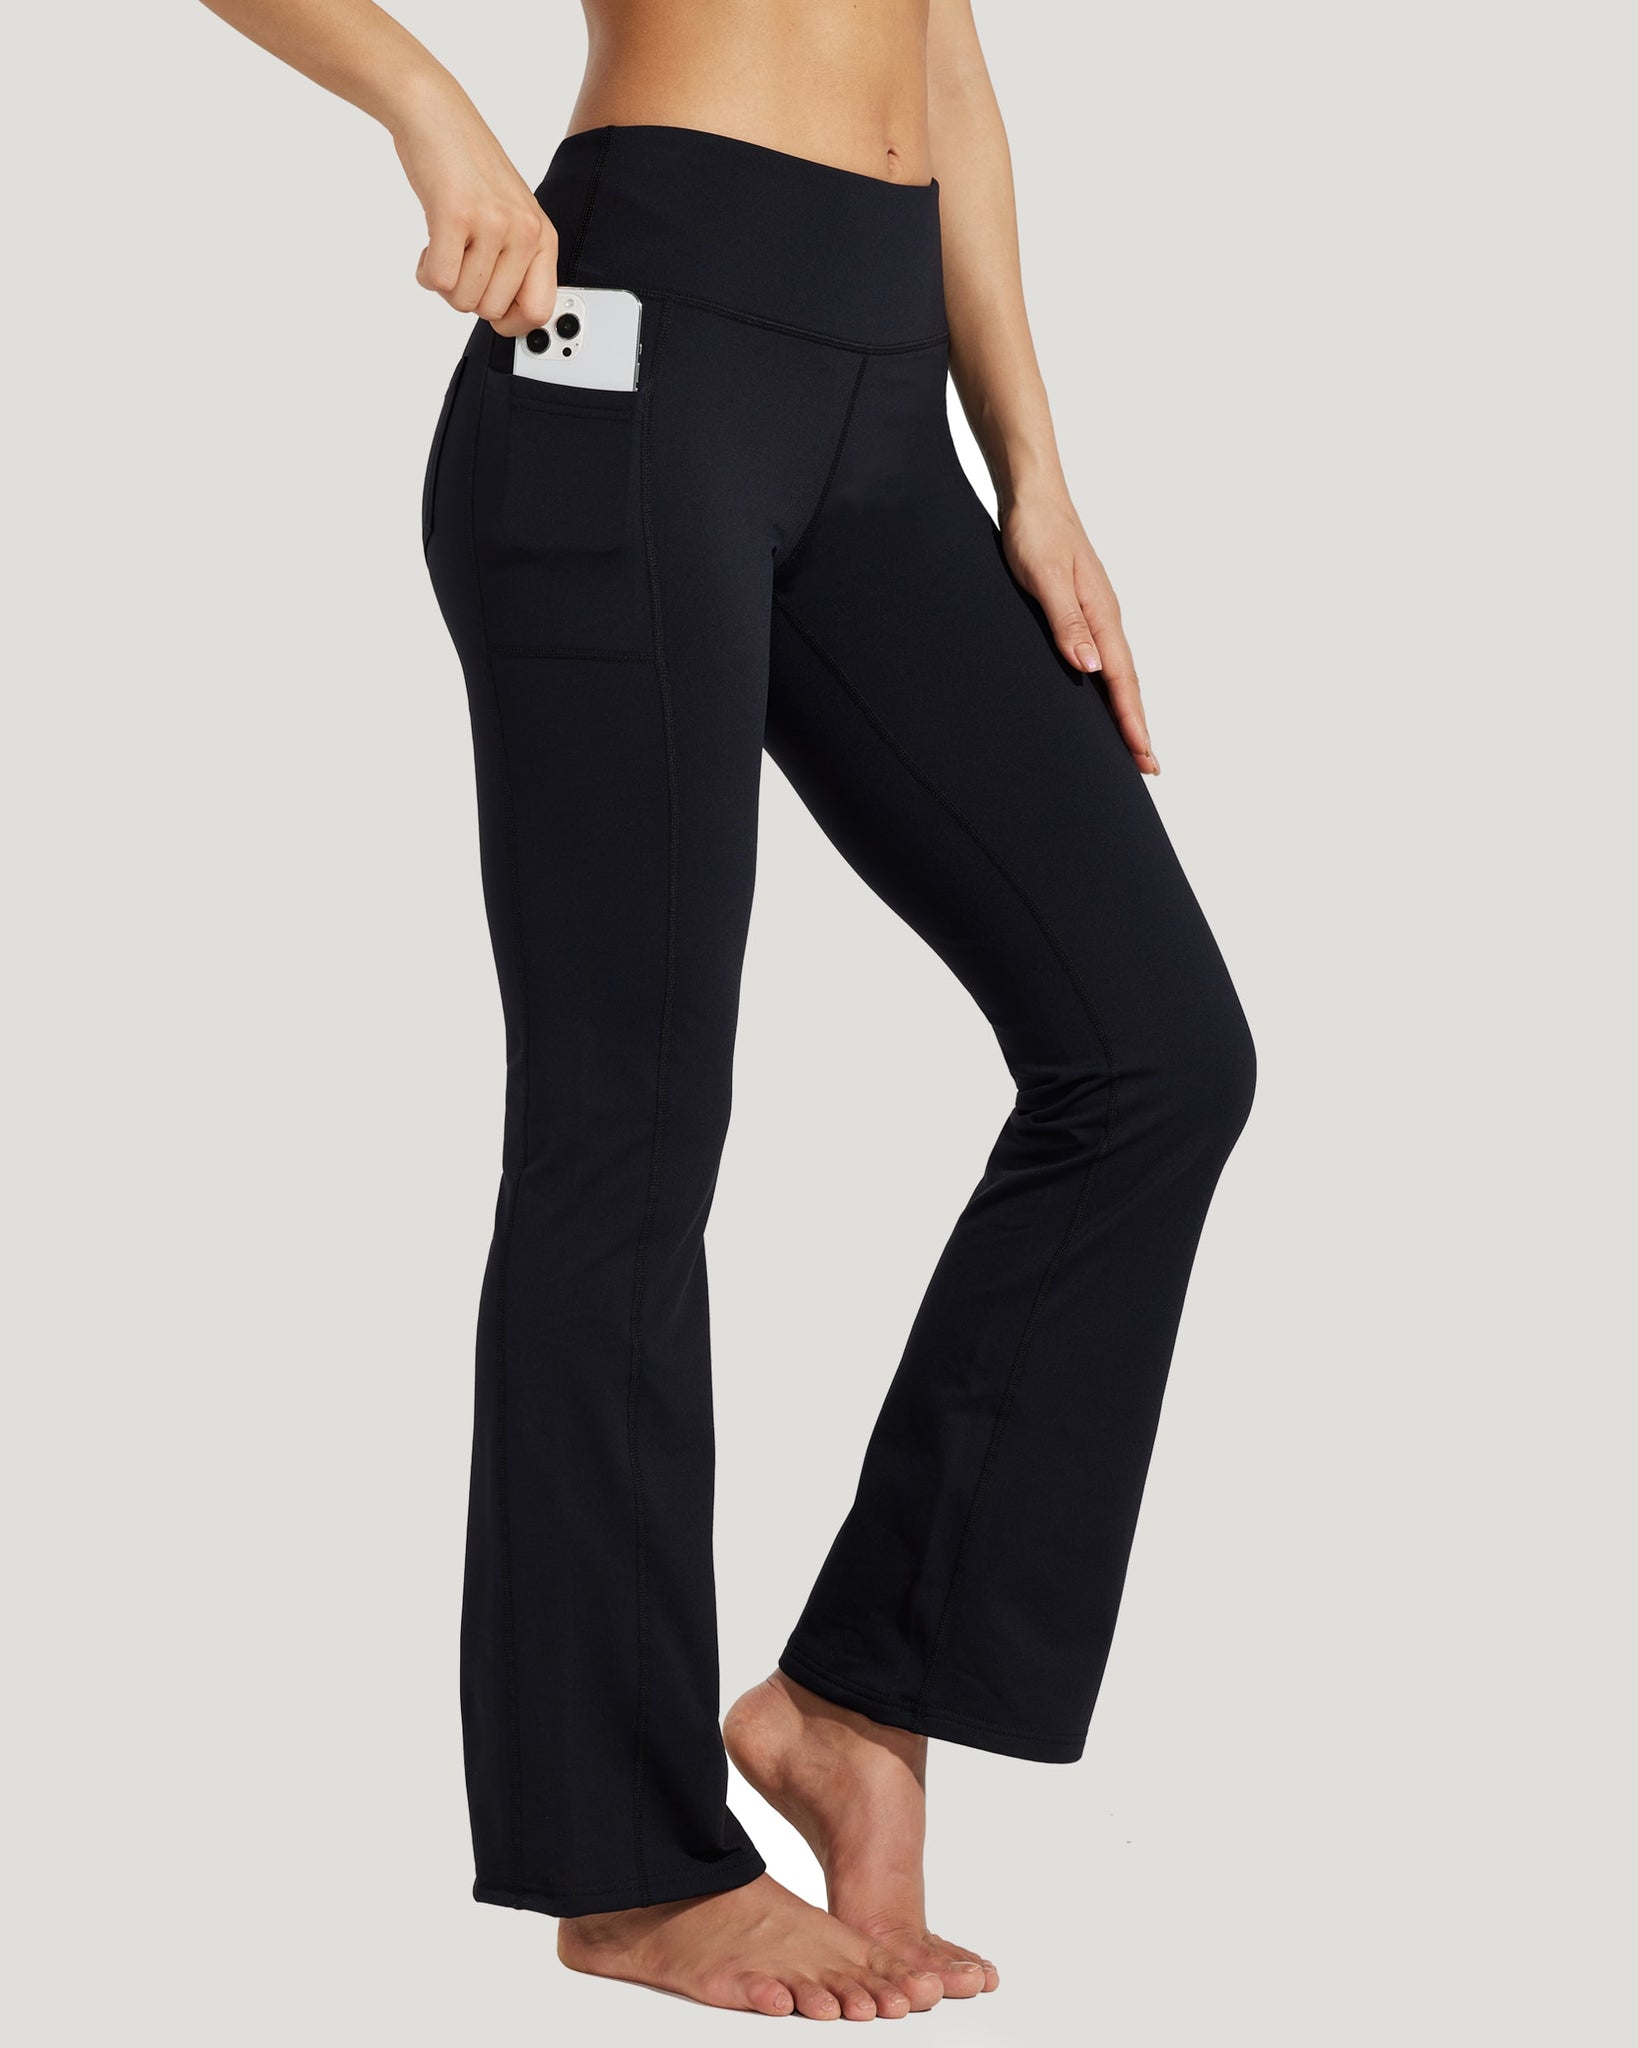 Women's Fleece Lined Bootcut Yoga Pants_Black_model1